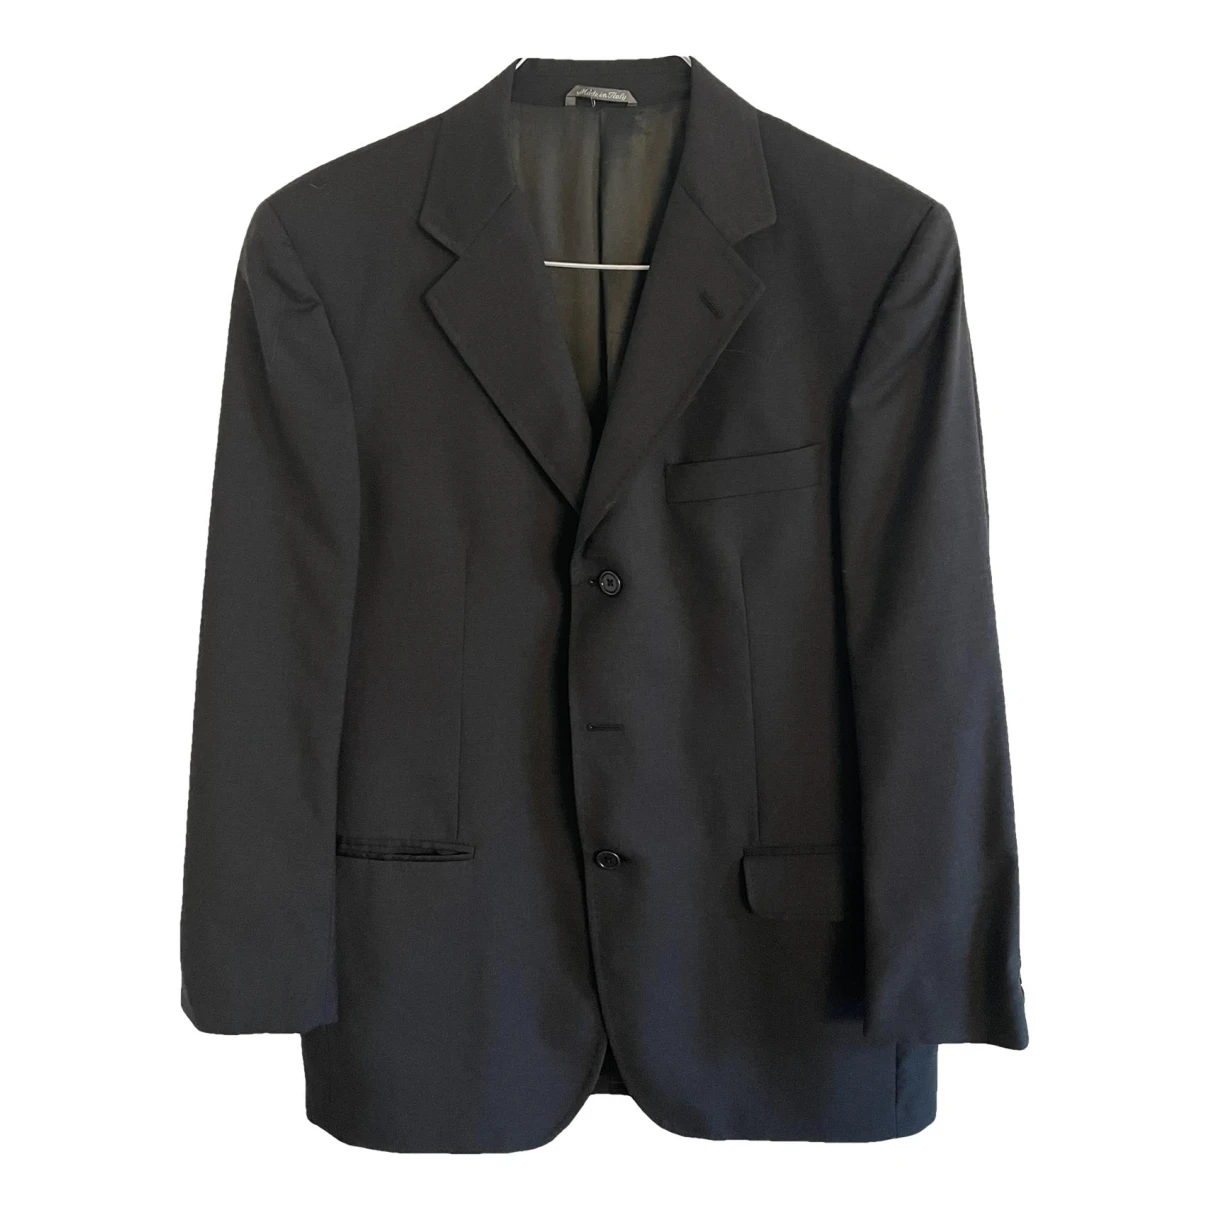 clothing Lardini jackets for Female Wool 50-52 IT. Used condition